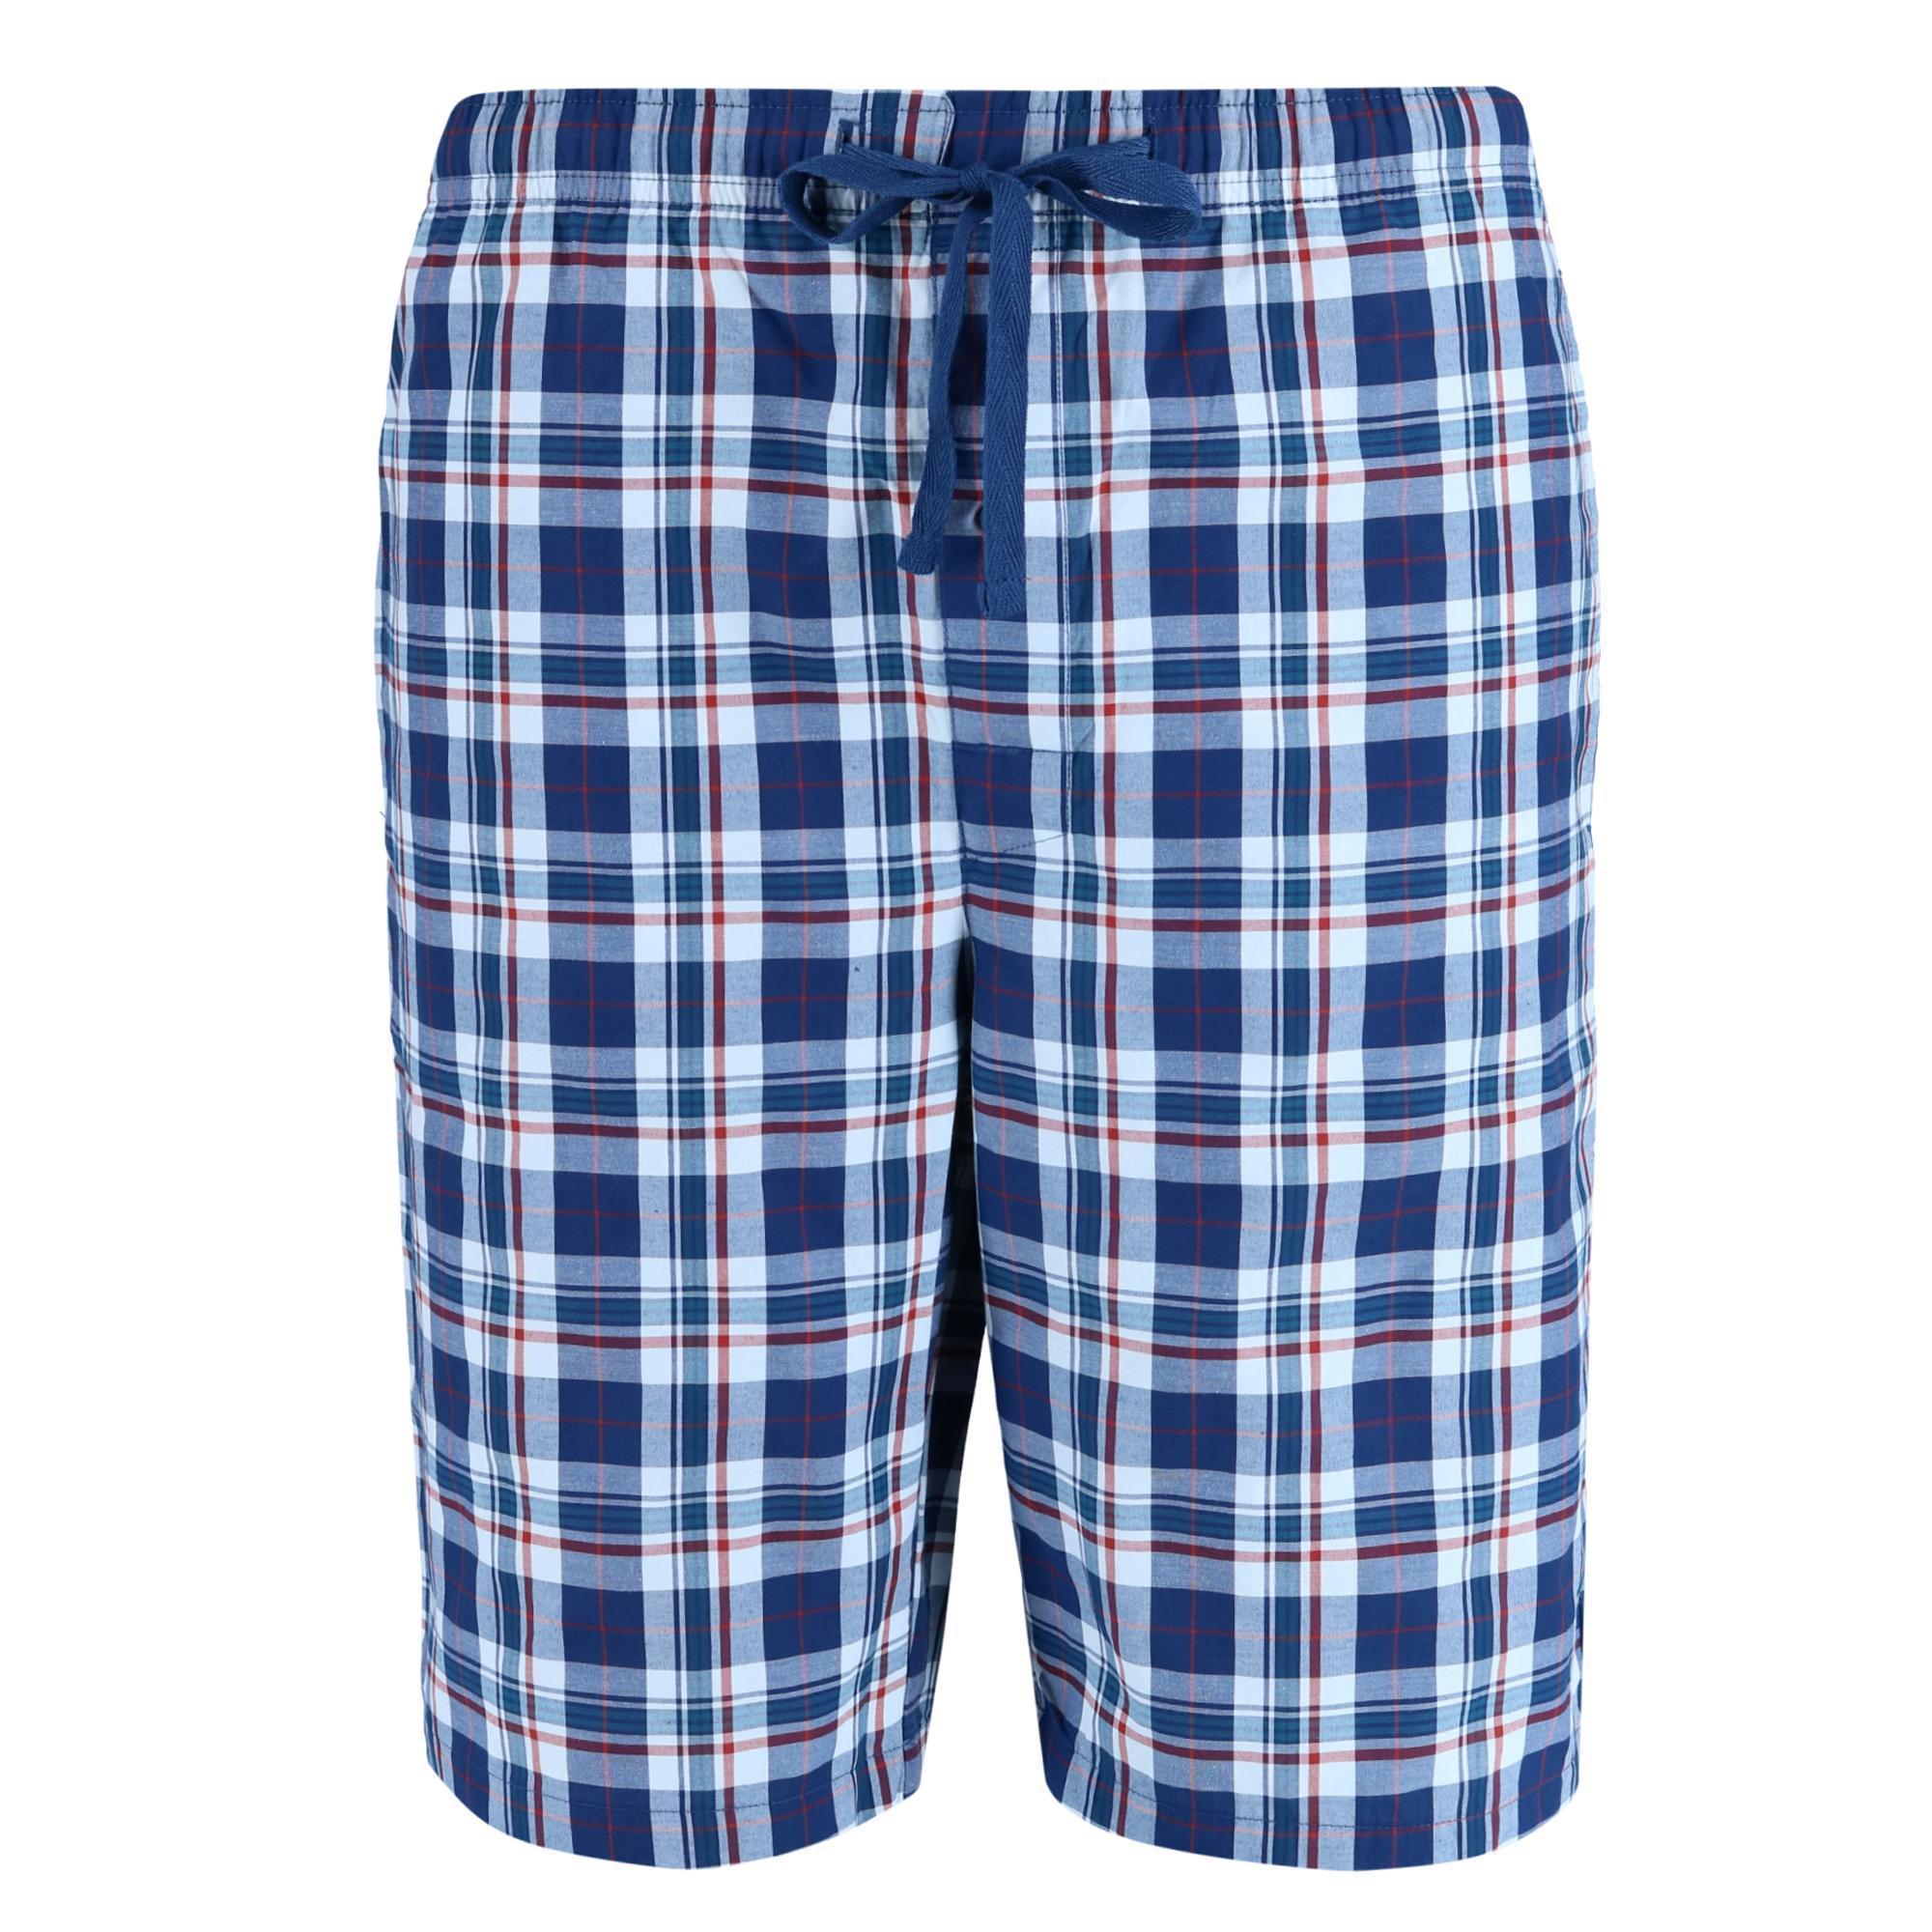 Hanes Men's Big and Tall Madras Sleep Pajama Shorts